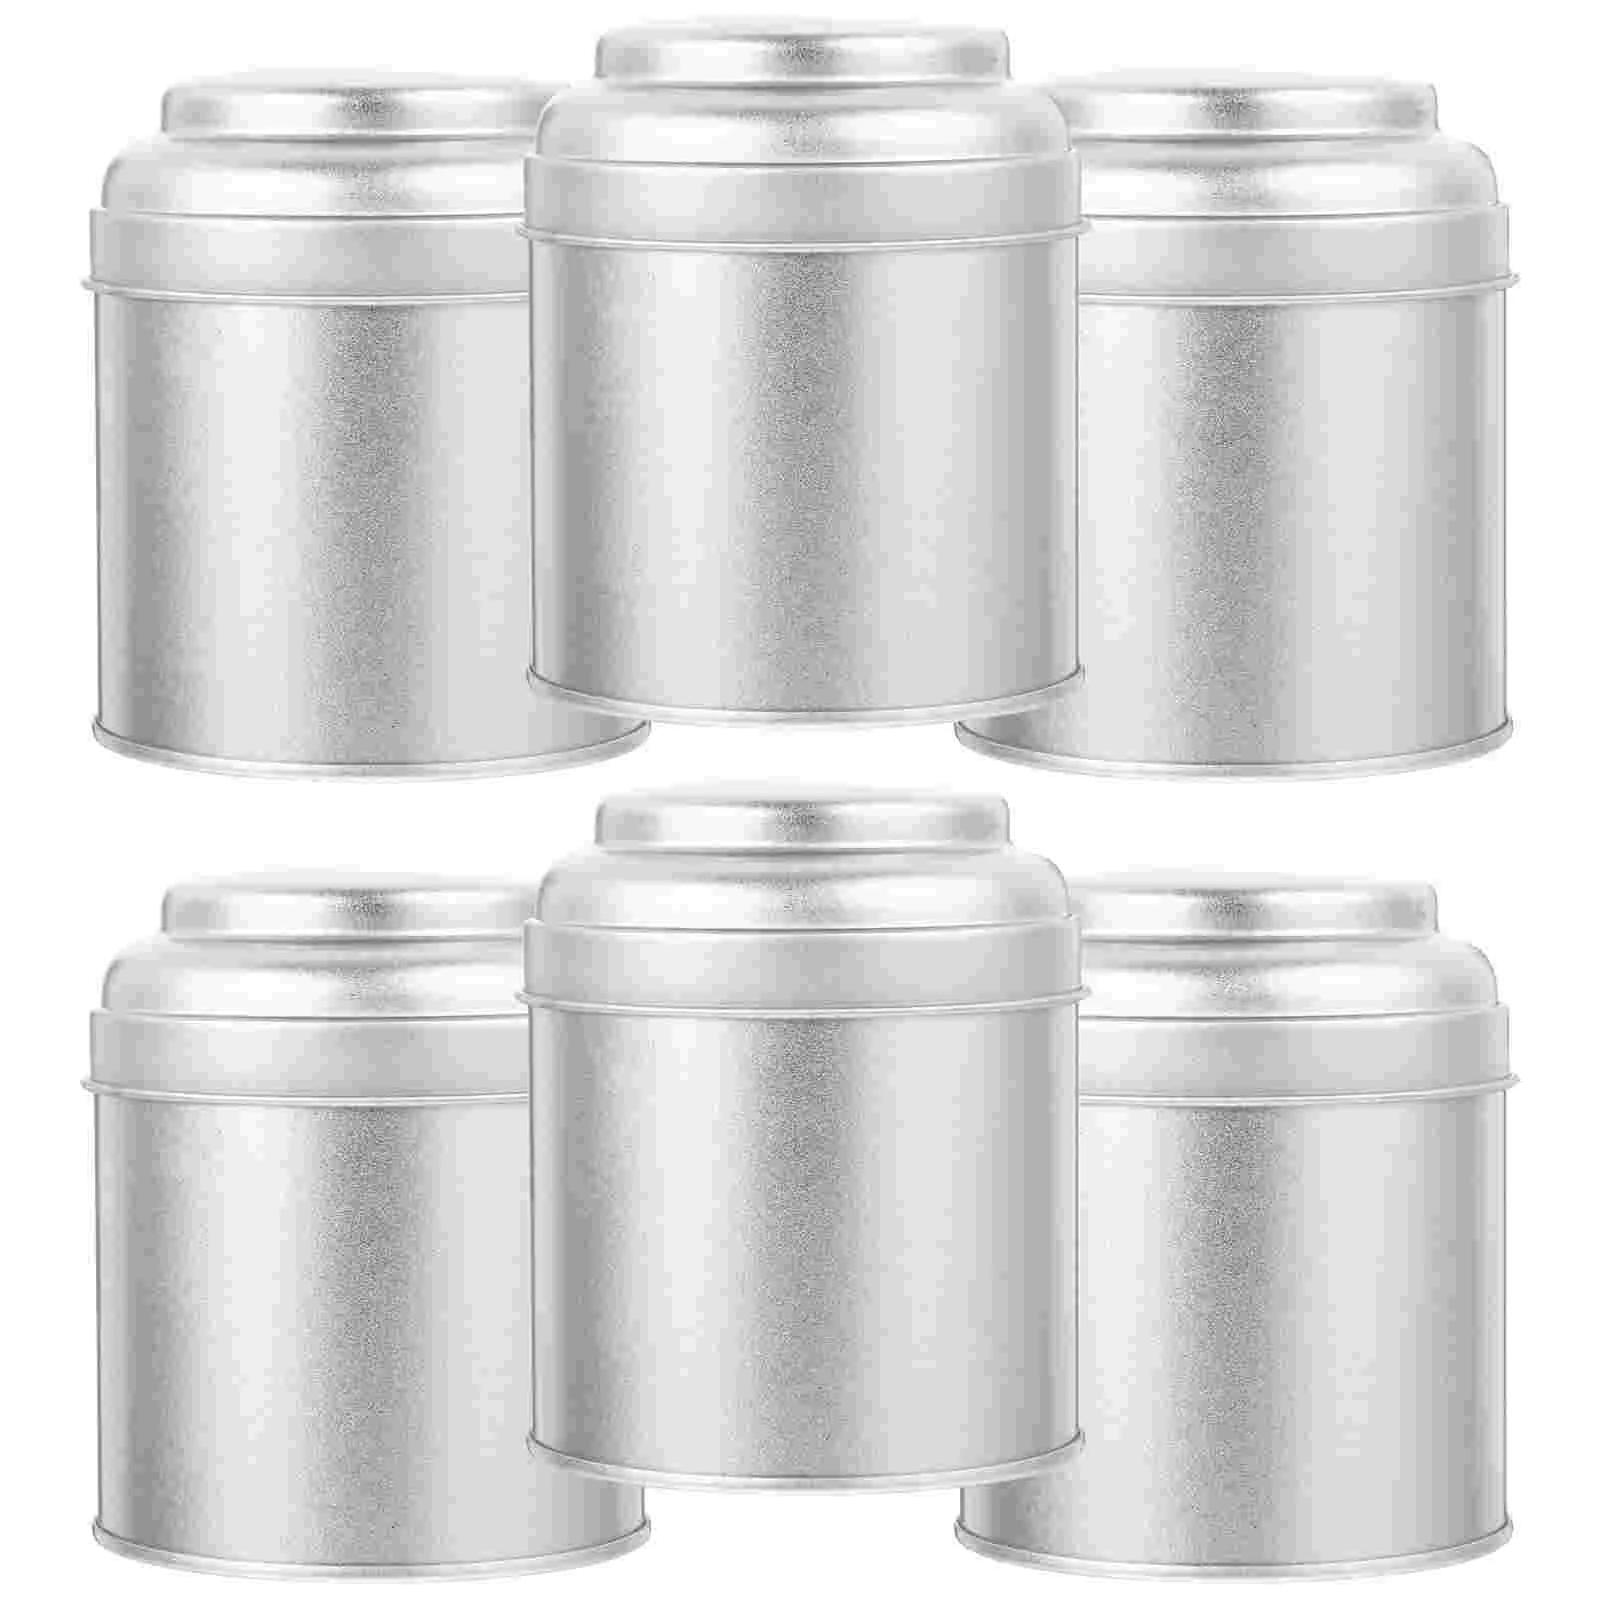 

6pcs Double Lids Tea Tins Airtight Loose Tea Canister Universal Candy Jars Coffee Sugar Jars